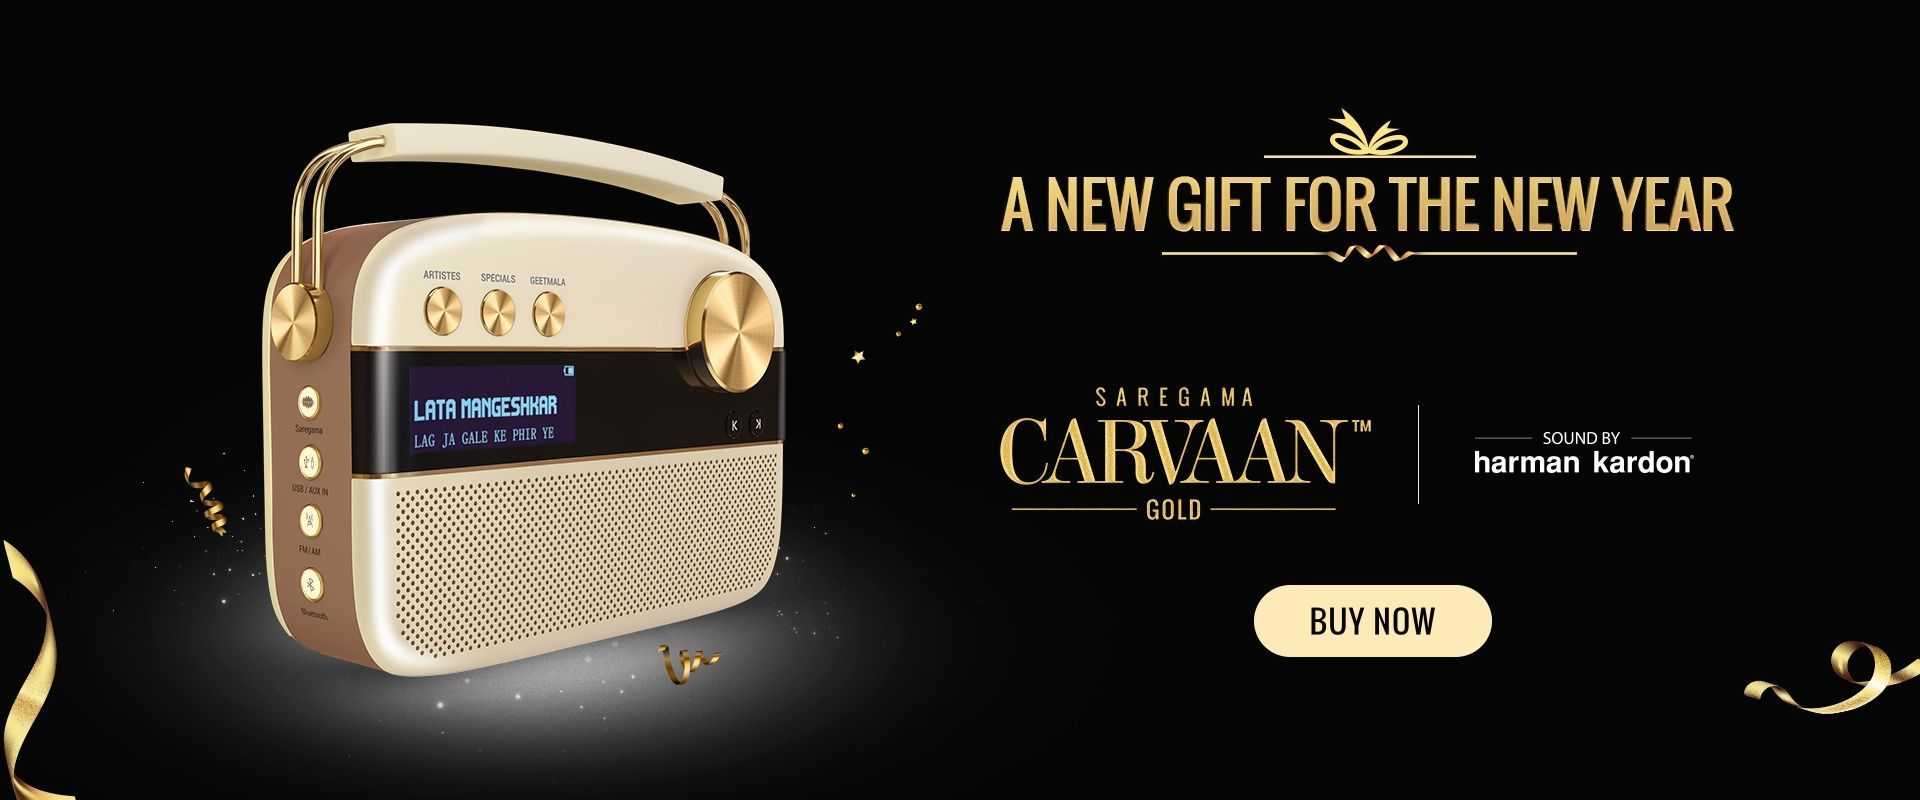 carvaan-gold-new-year-1920x800_1545903214.jpg  by saregama